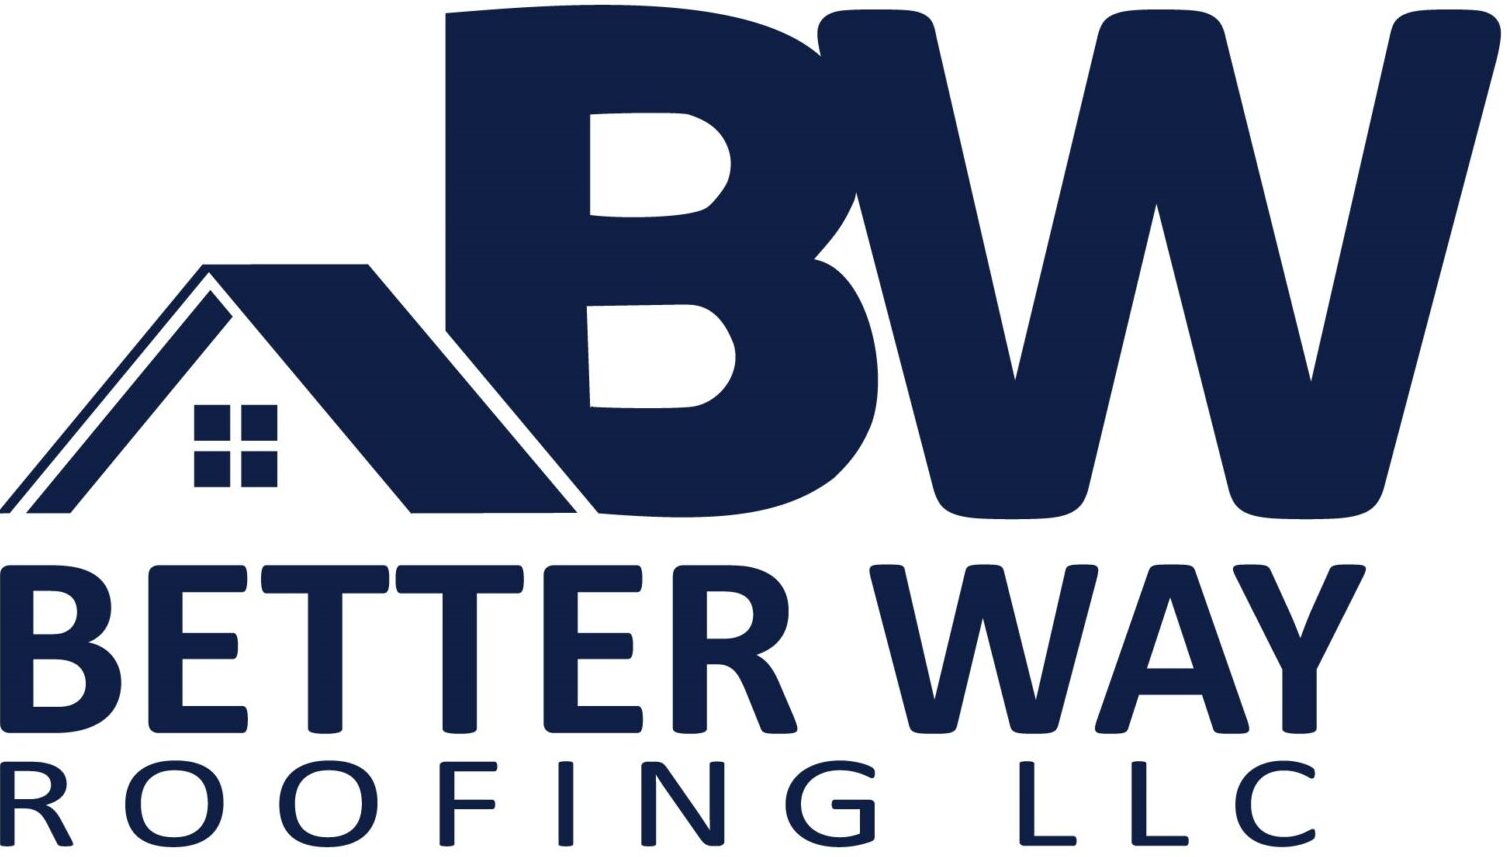 Better Way Roofing LLC Logo